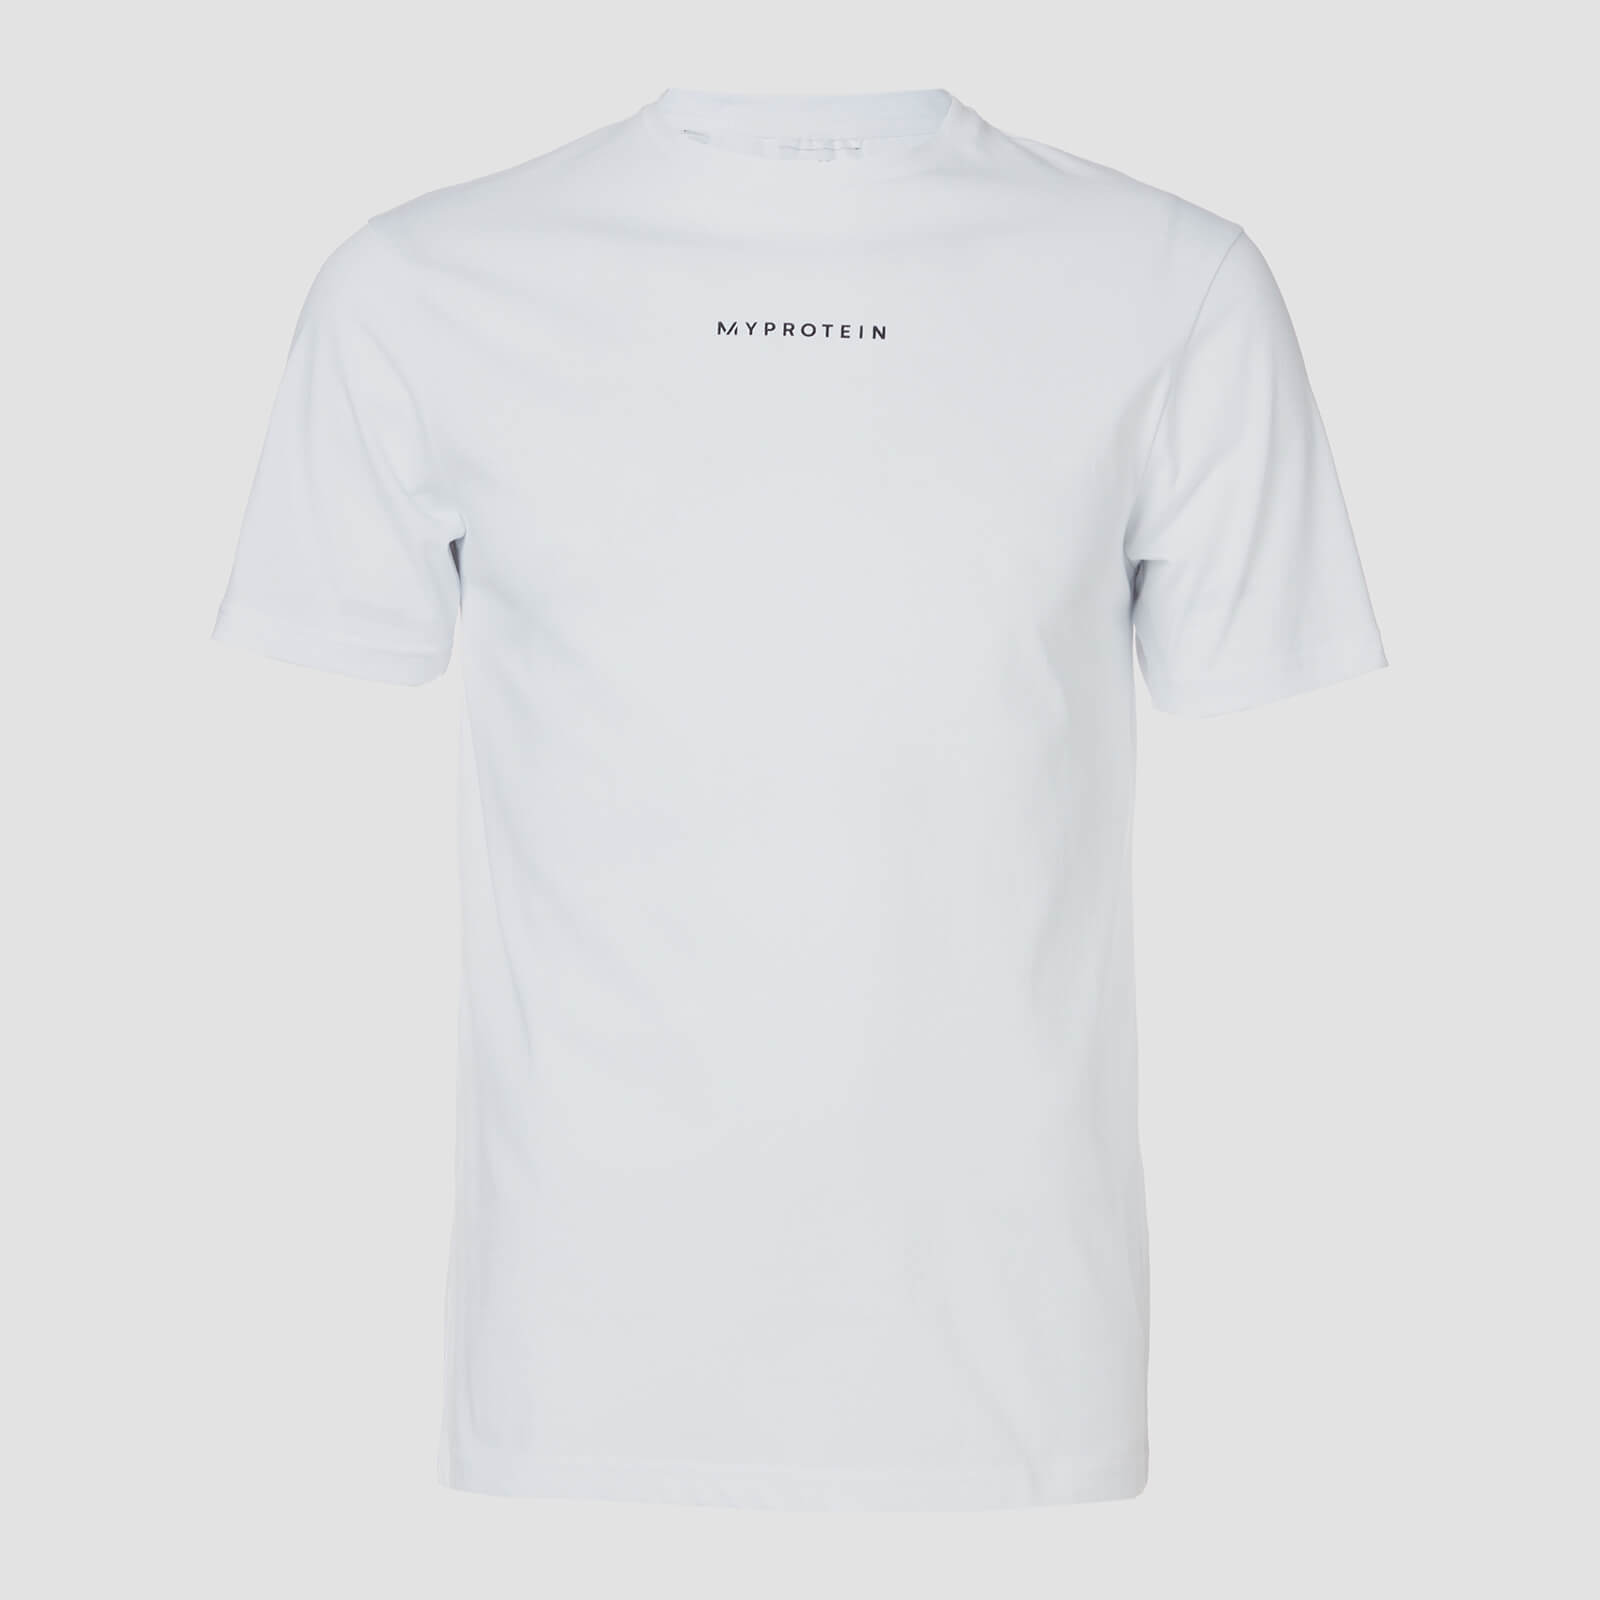 Myprotein Camiseta Original Contemporary - Blanco - XXL